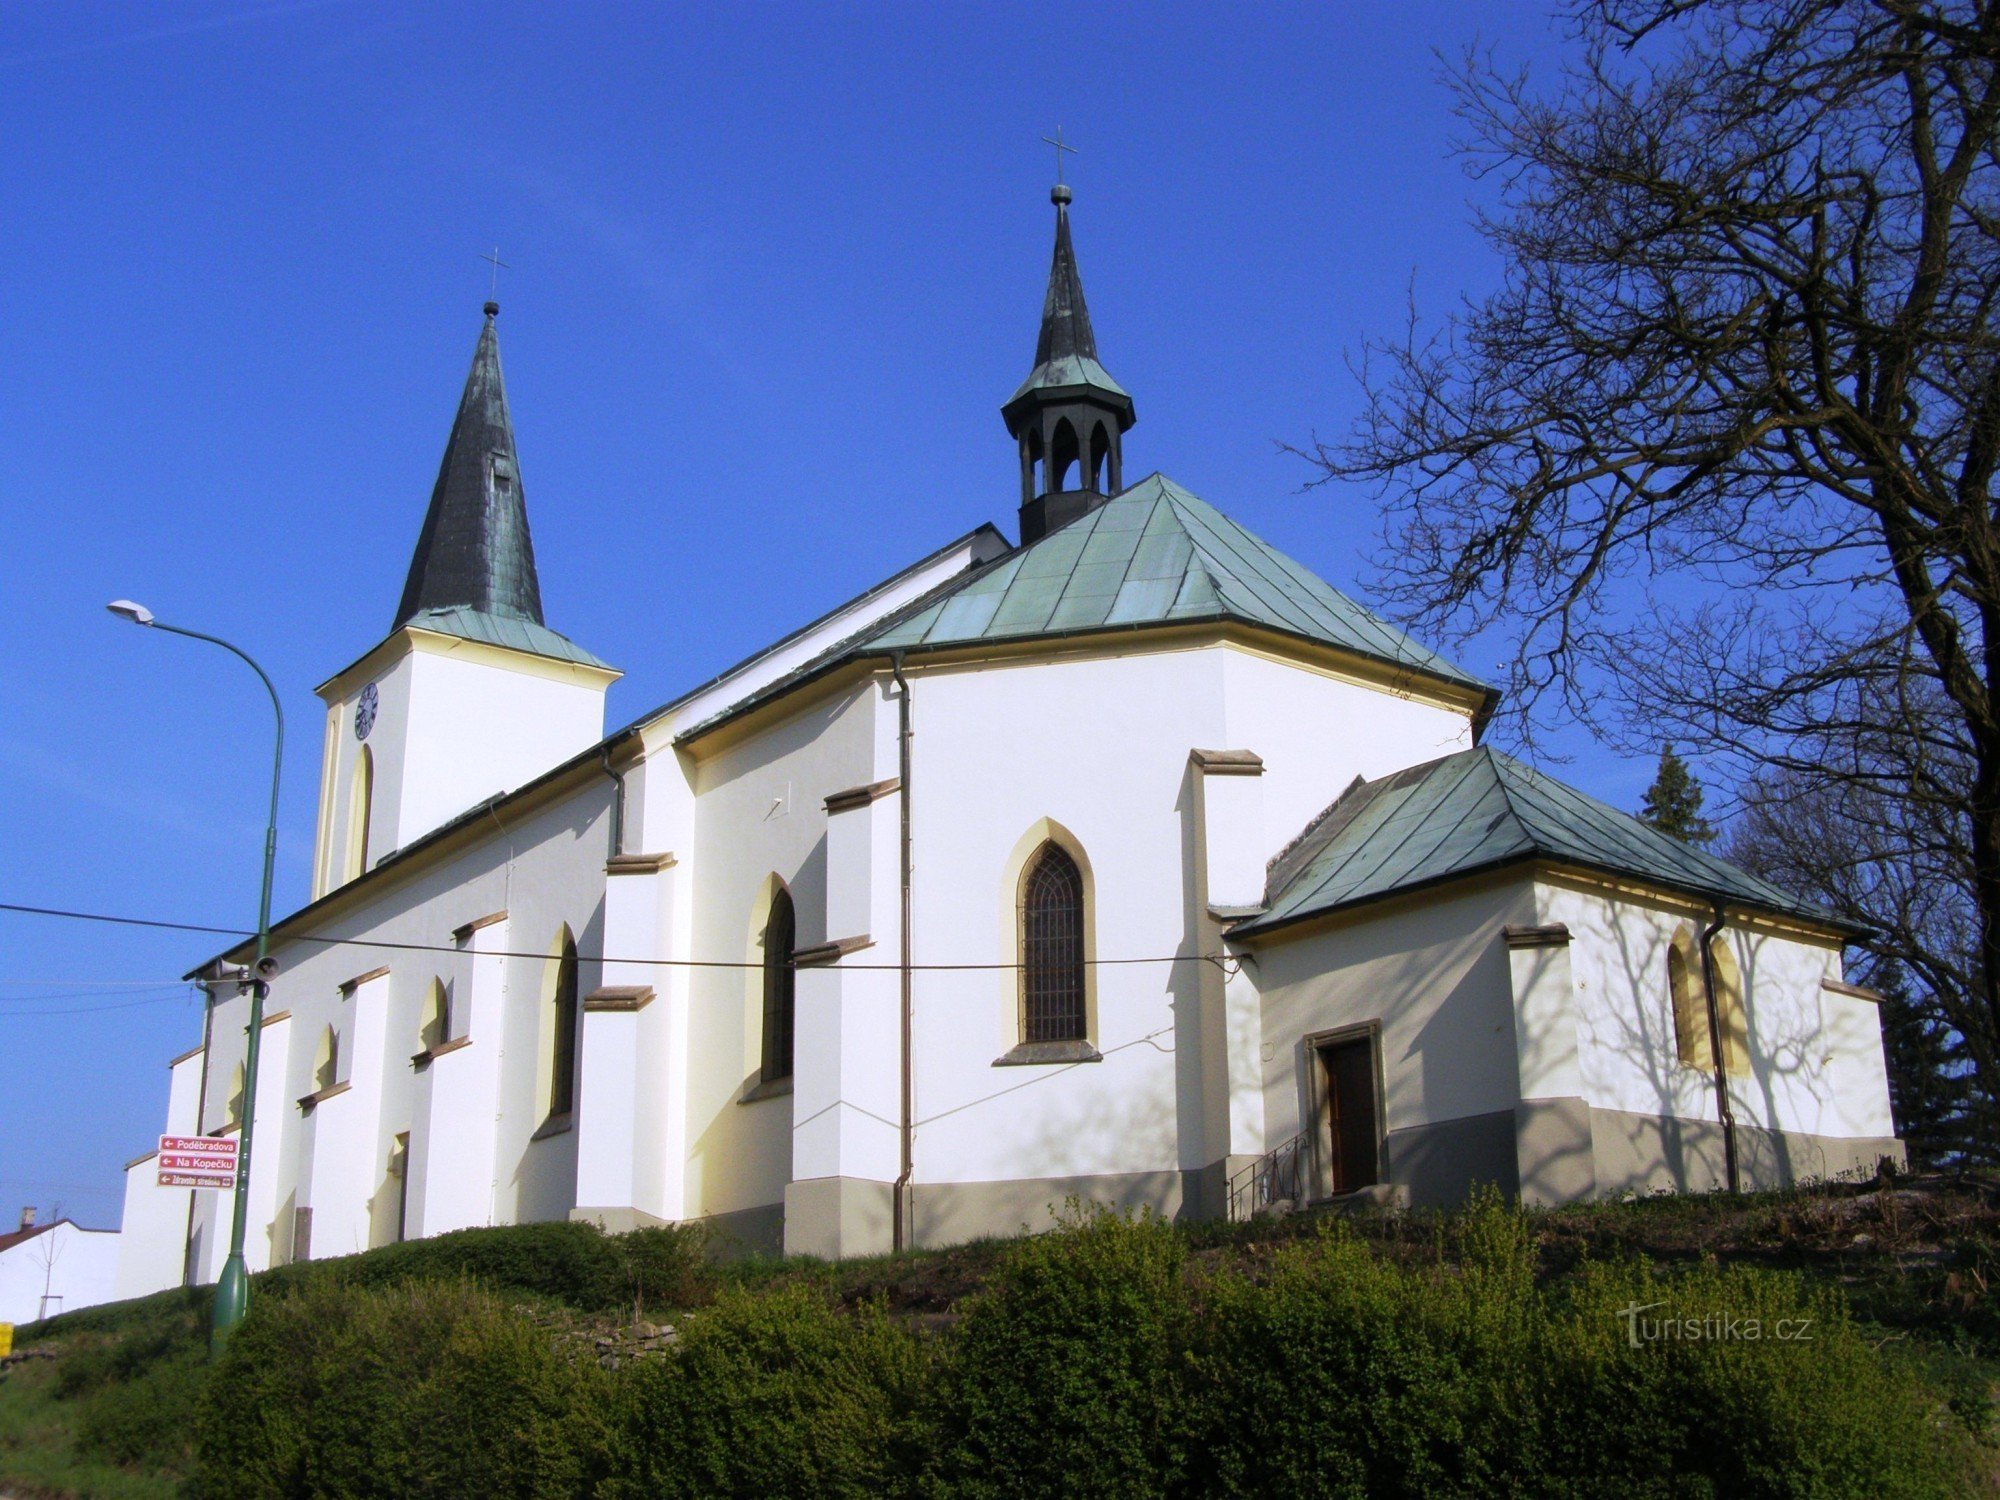 Horní Jelení - Biserica Sfintei Treimi